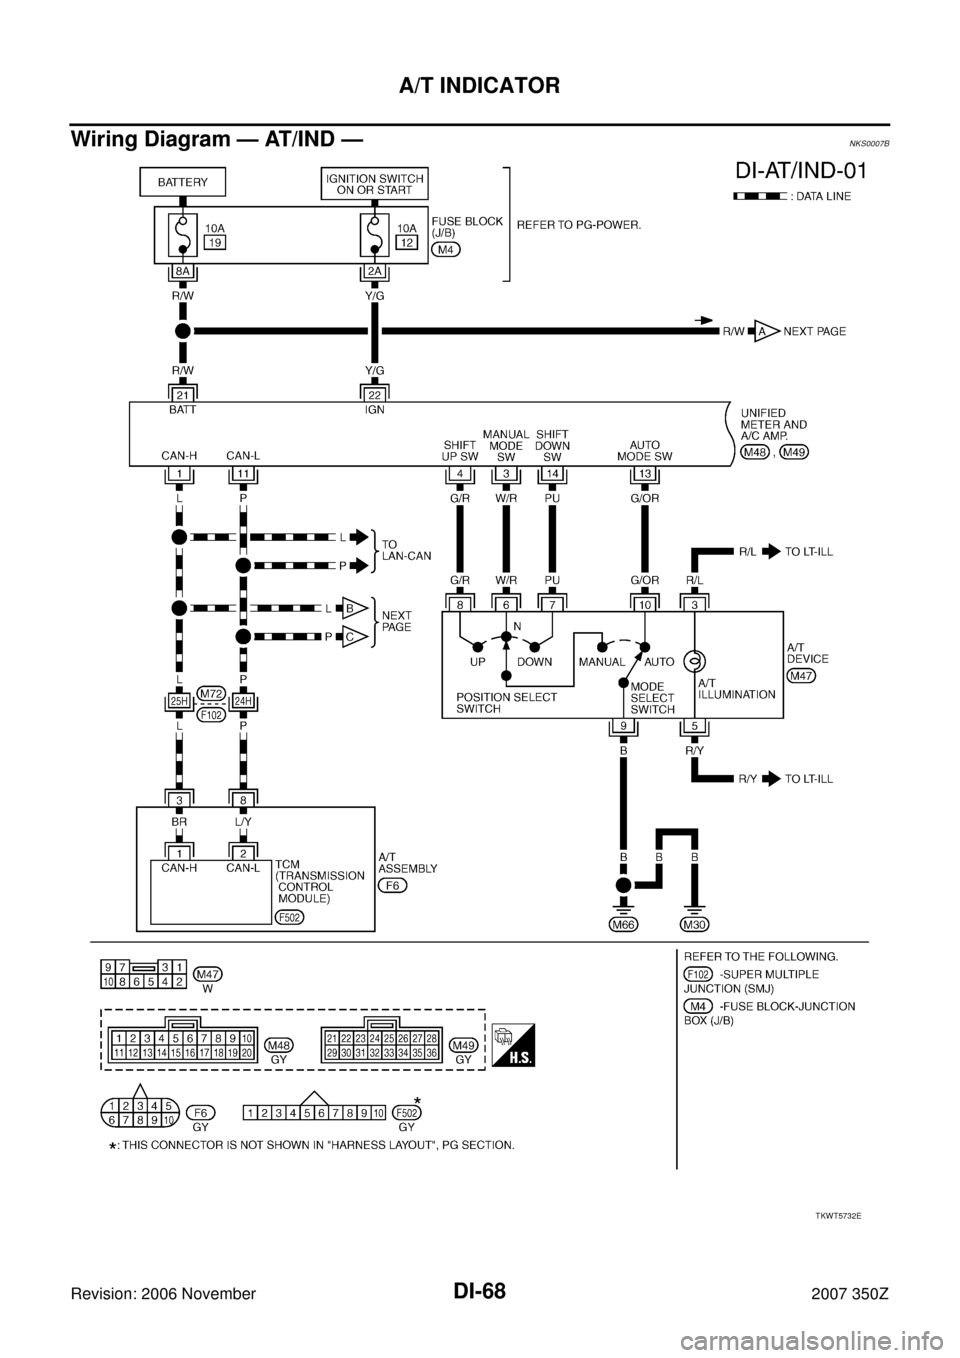 NISSAN 350Z 2007 Z33 Driver Information Manual DI-68
A/T INDICATOR
Revision: 2006 November2007 350Z
Wiring Diagram — AT/IND —NKS0007B
TKWT5732E 